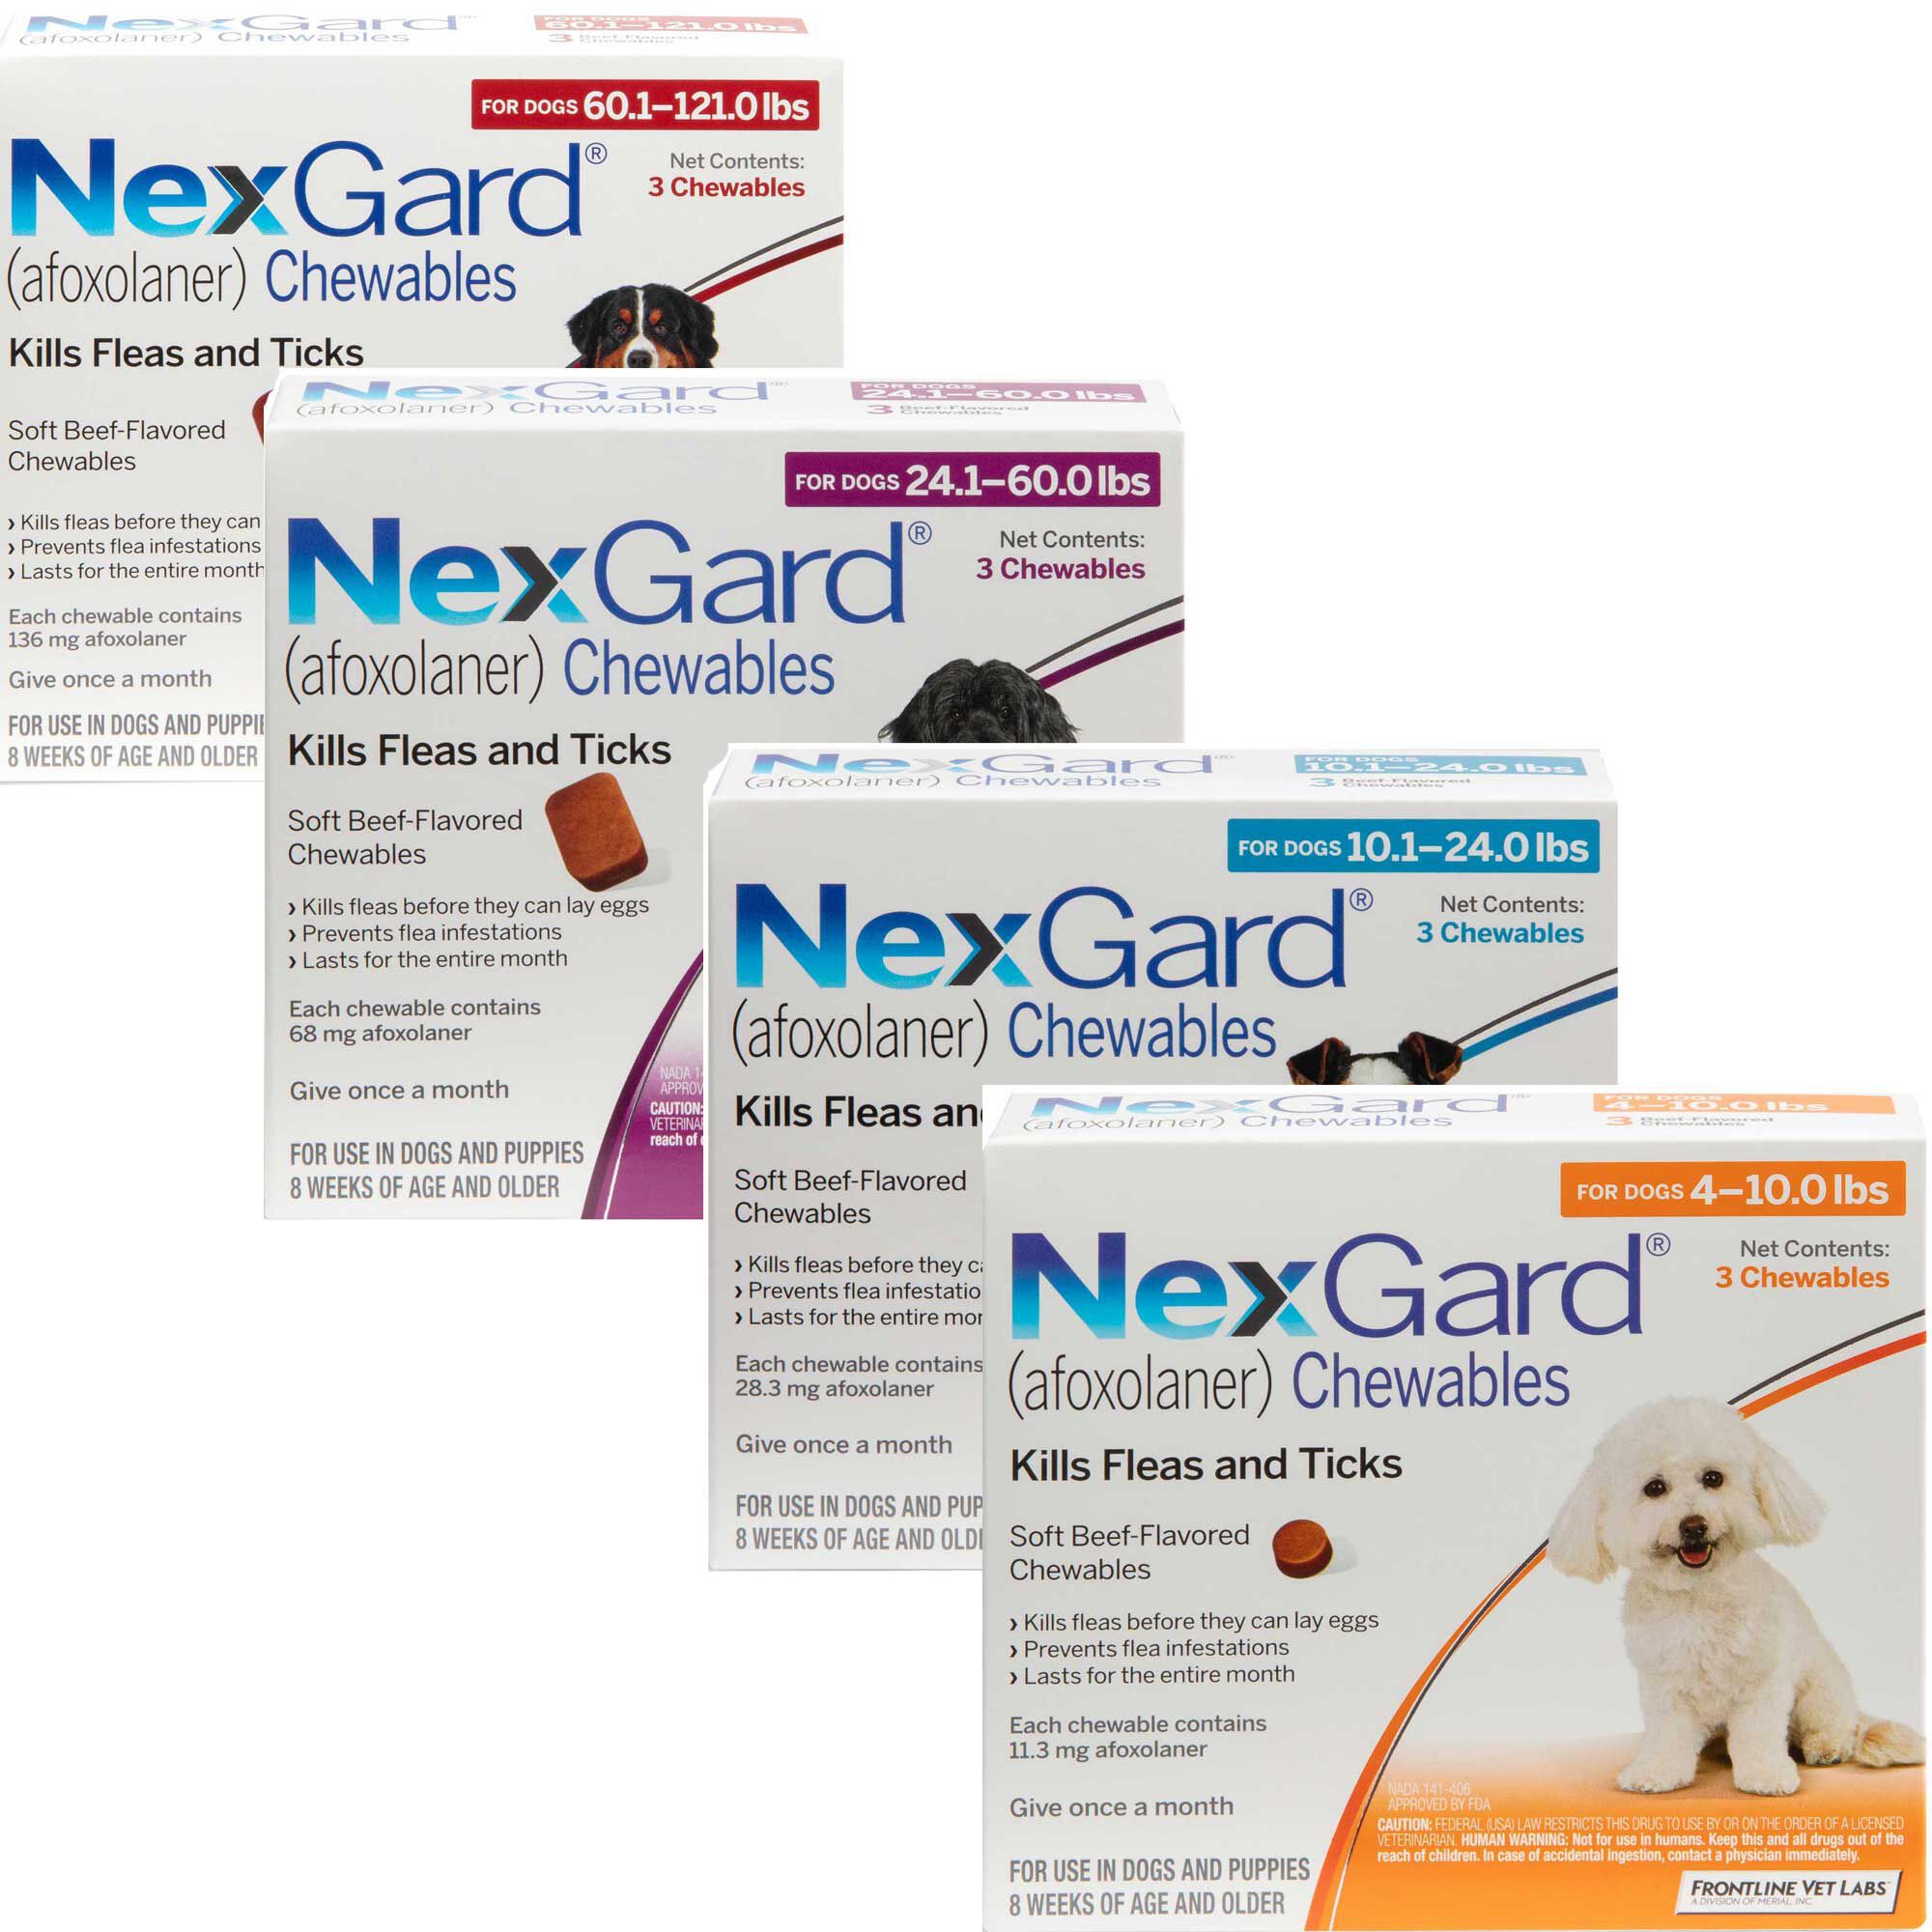 nexgard products